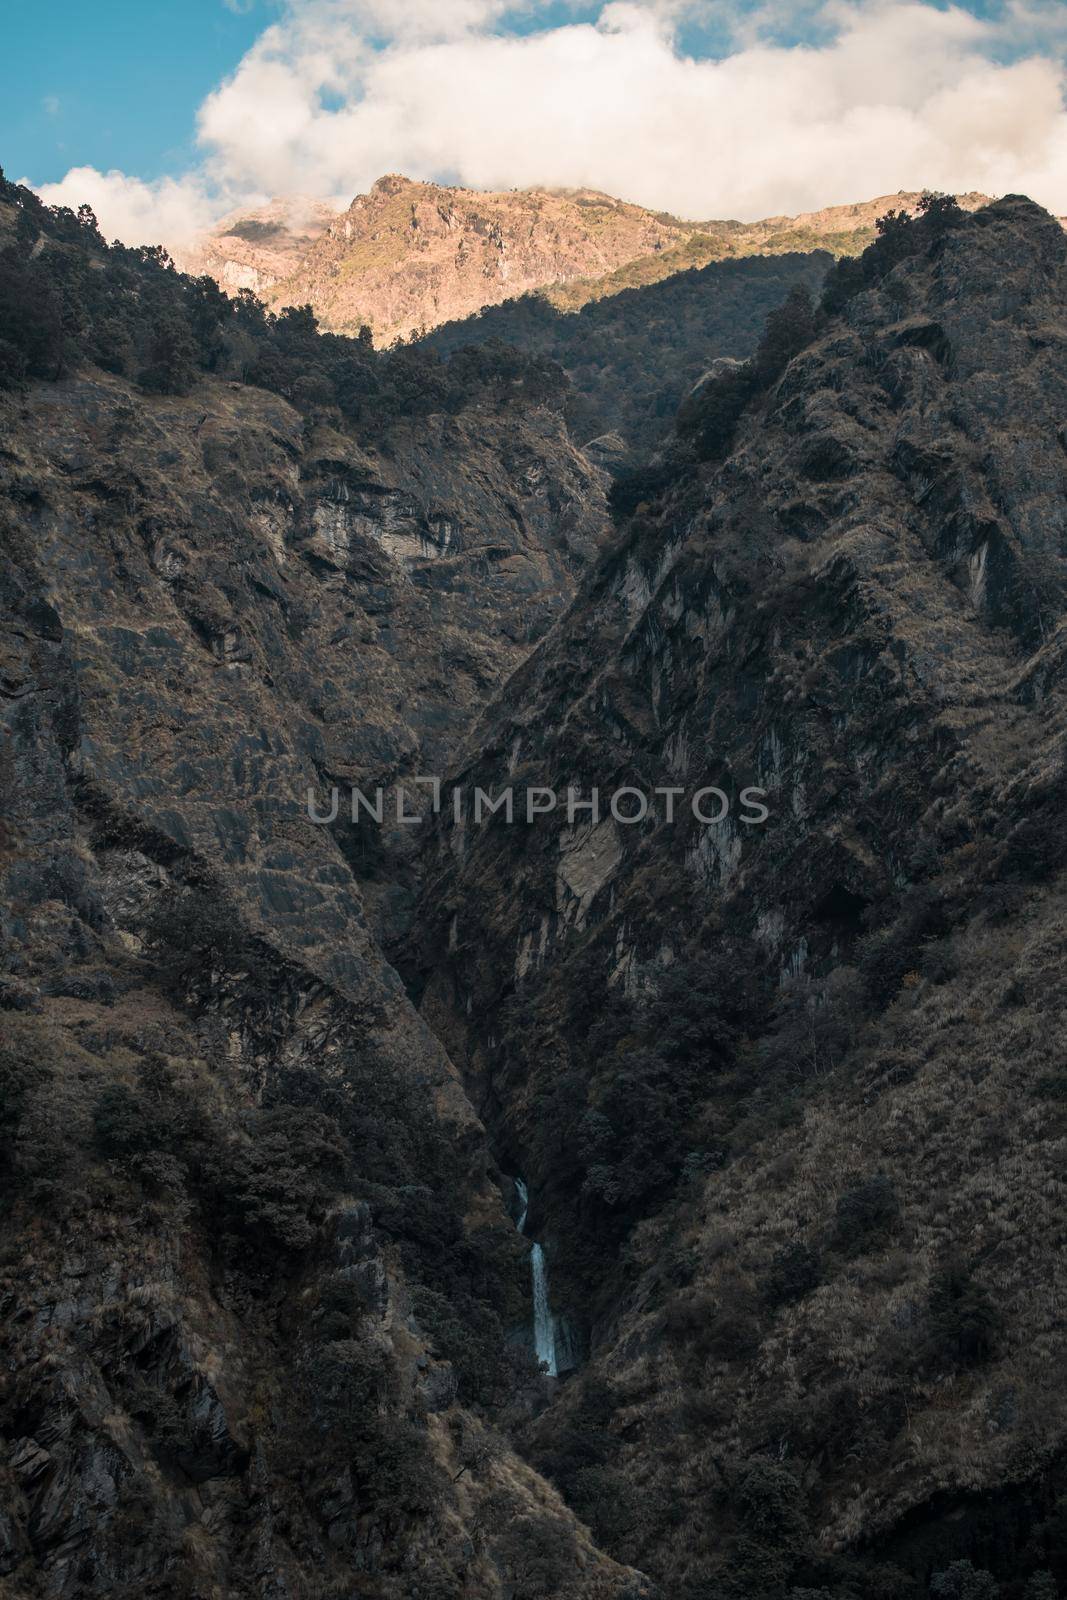 Small waterfall, huge mountains, shadows playing, Annapurna circuit, Nepal